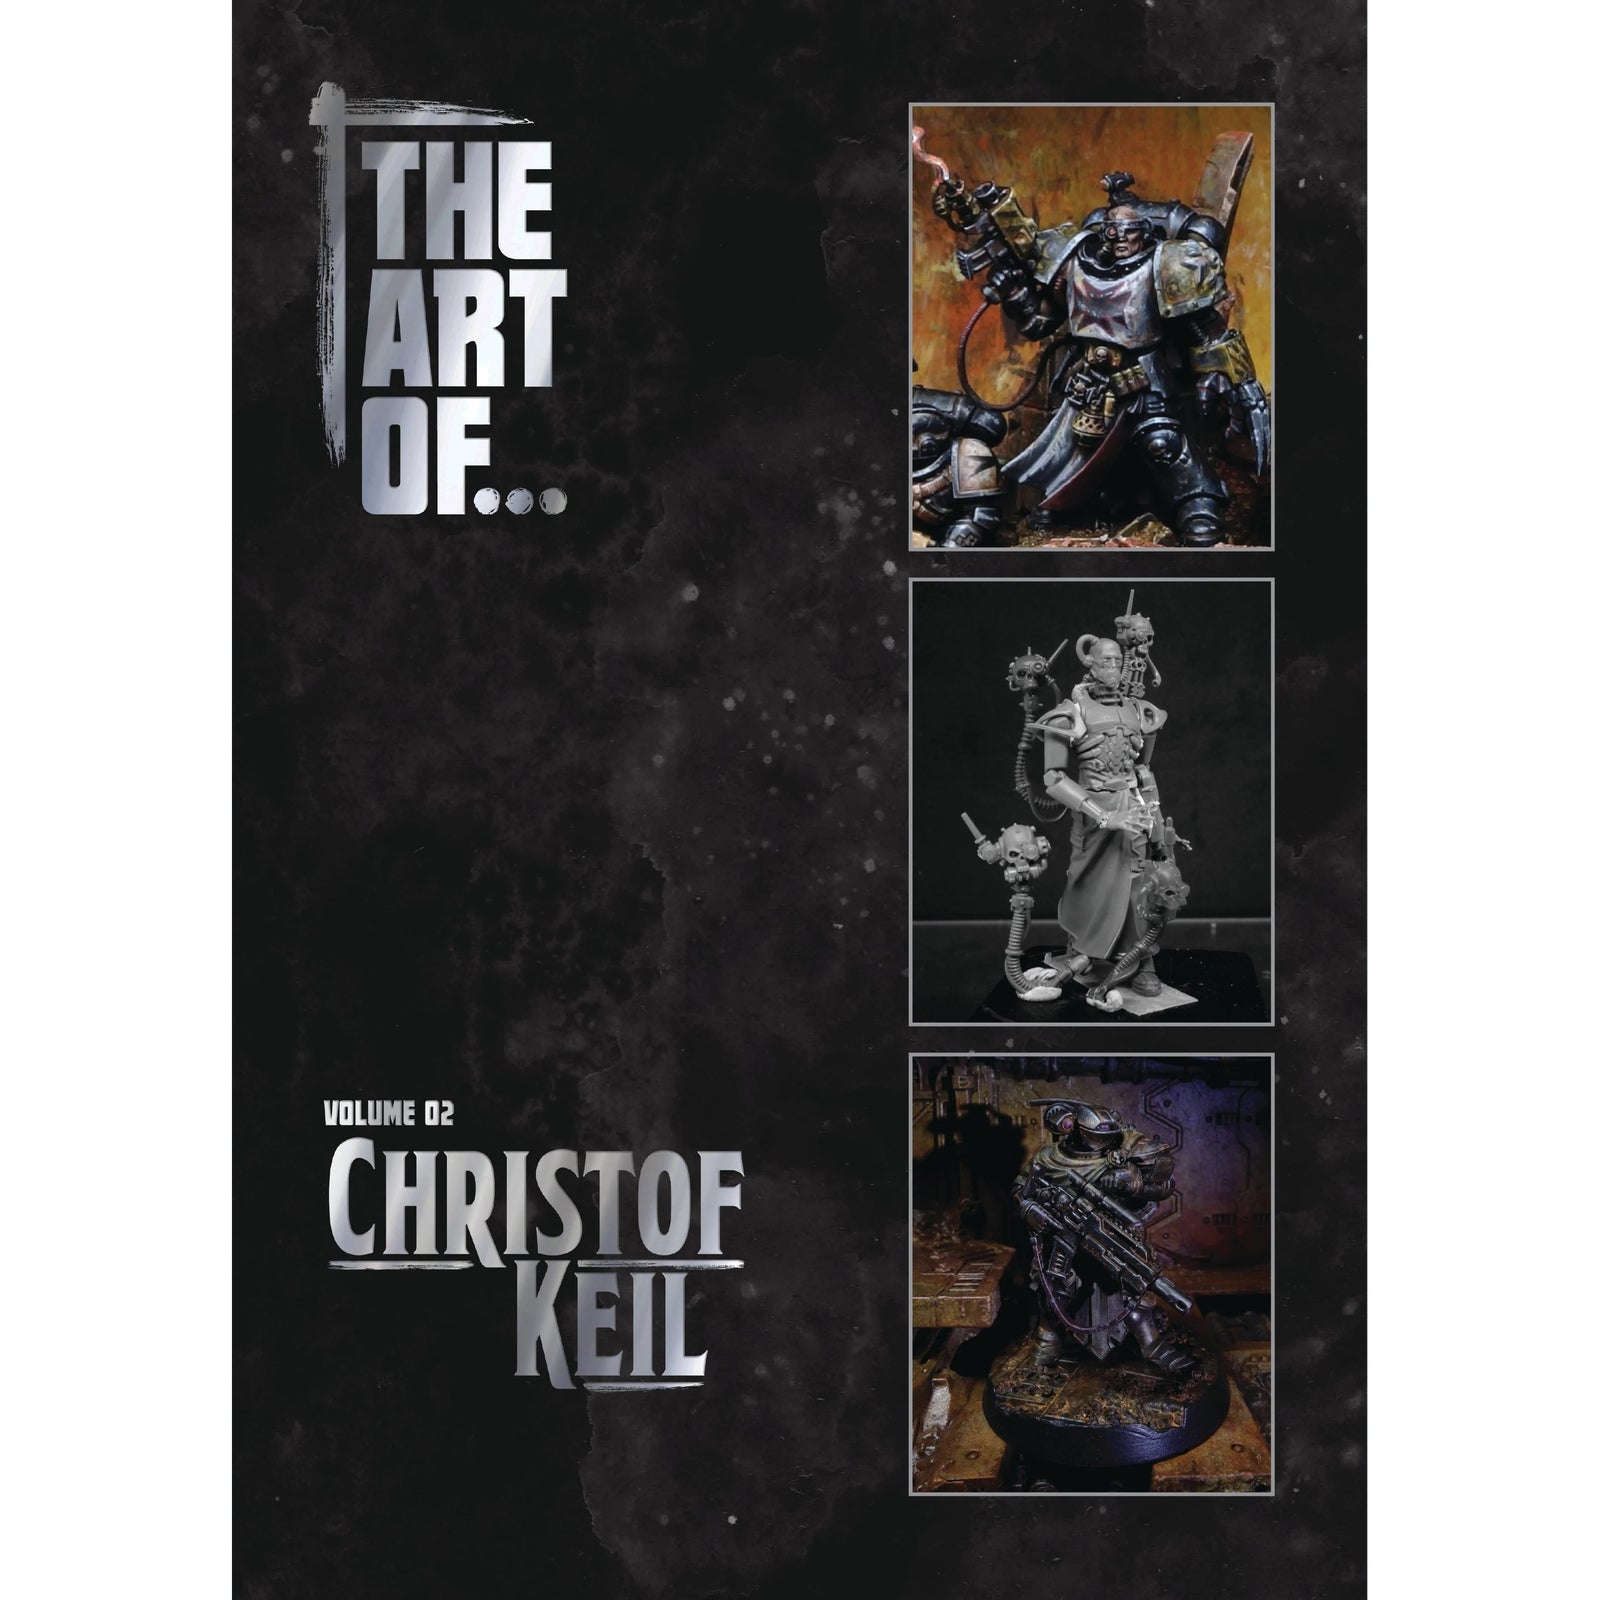 The Art of Christof Keil